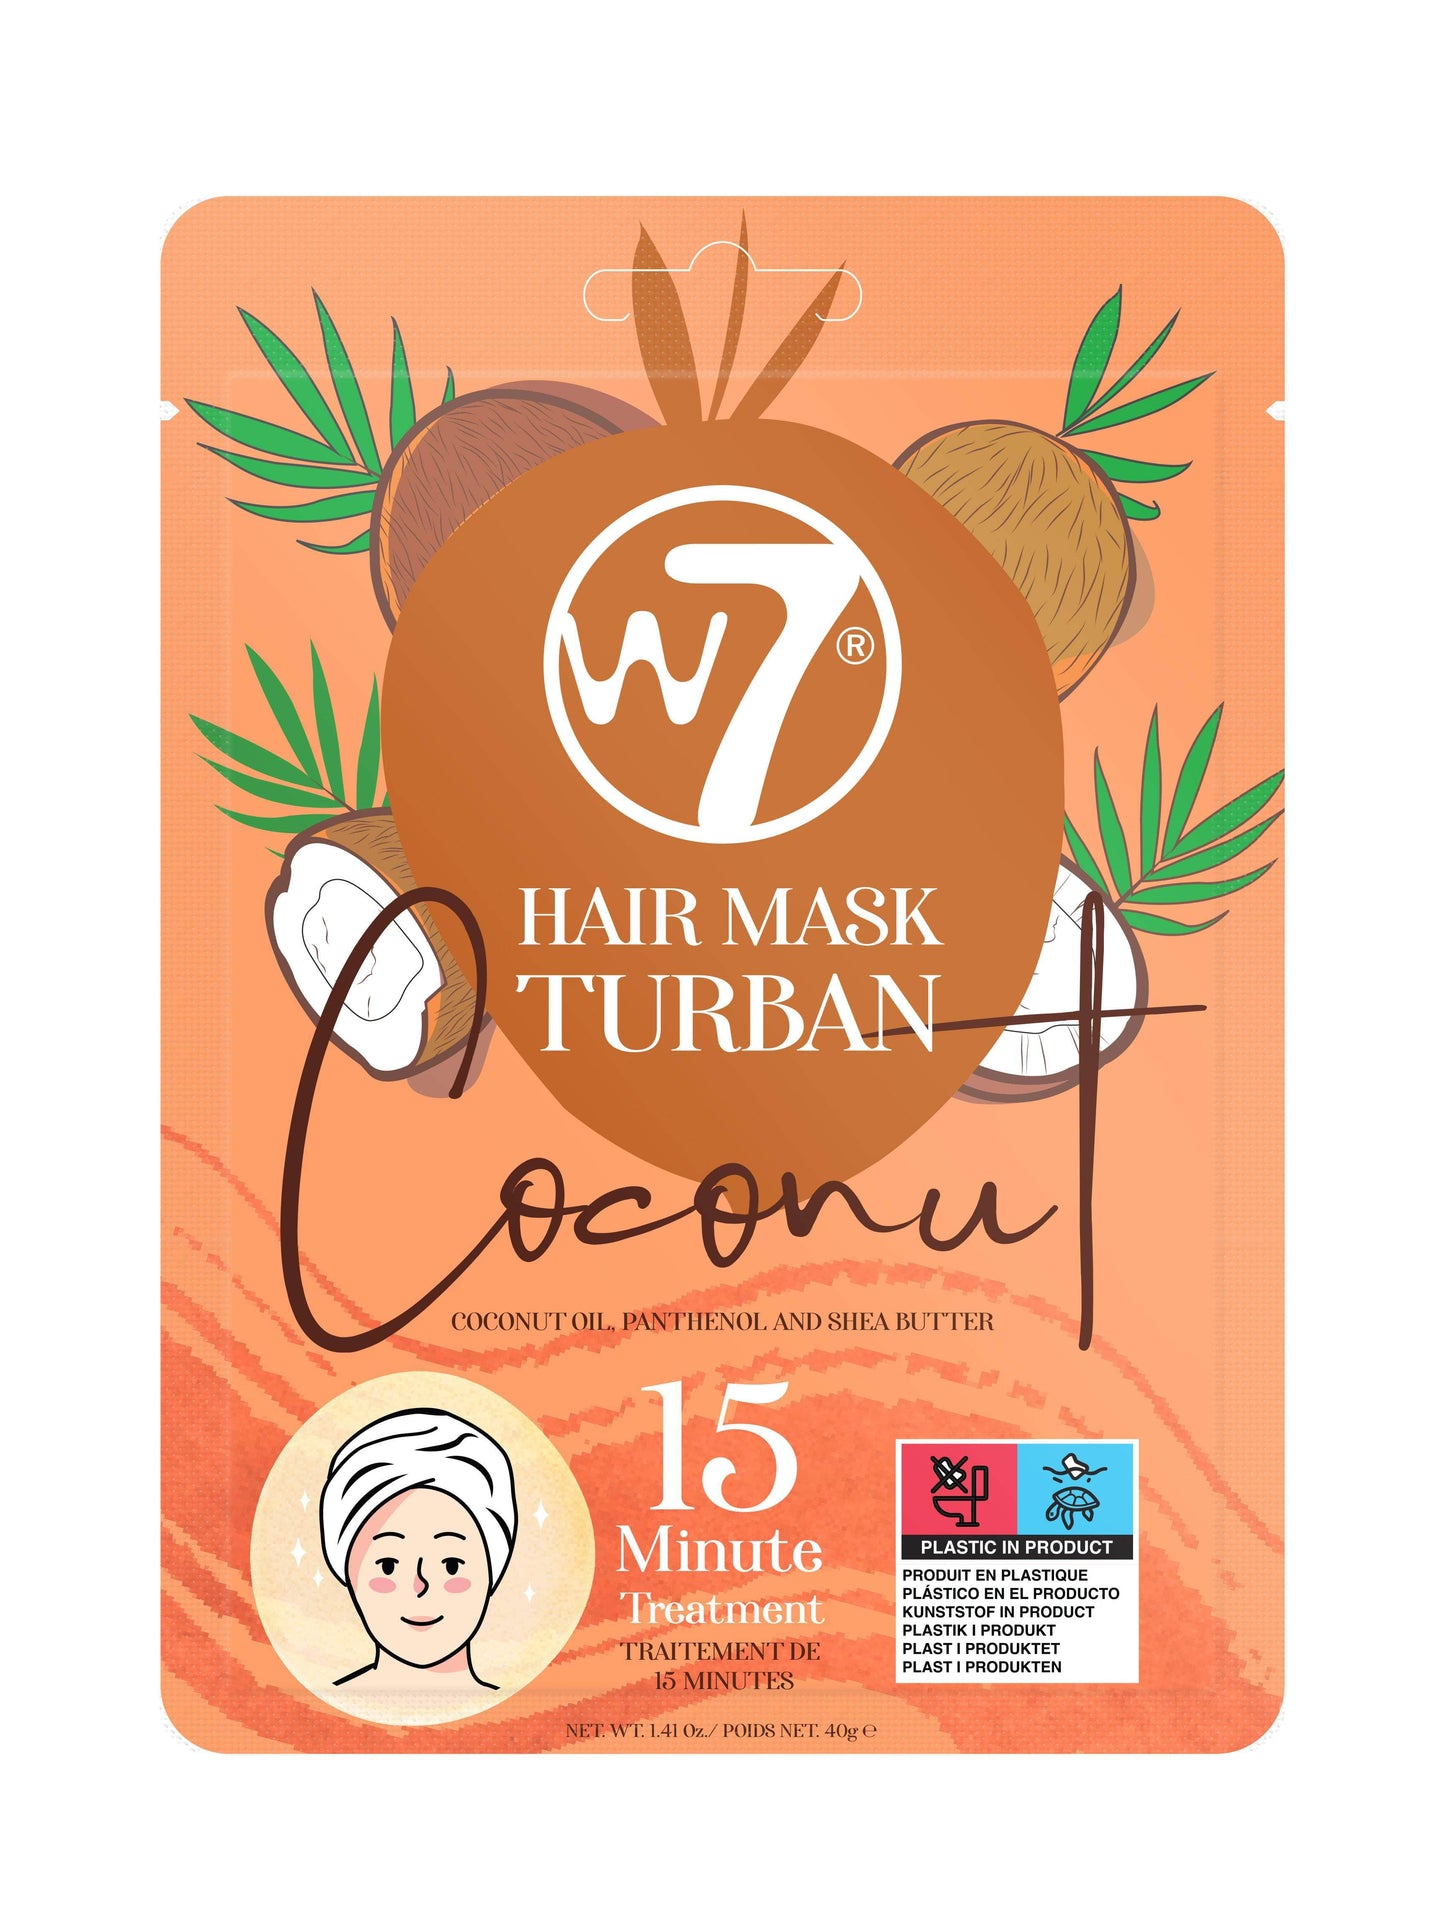 W7 Hair Mask Turban Coconut